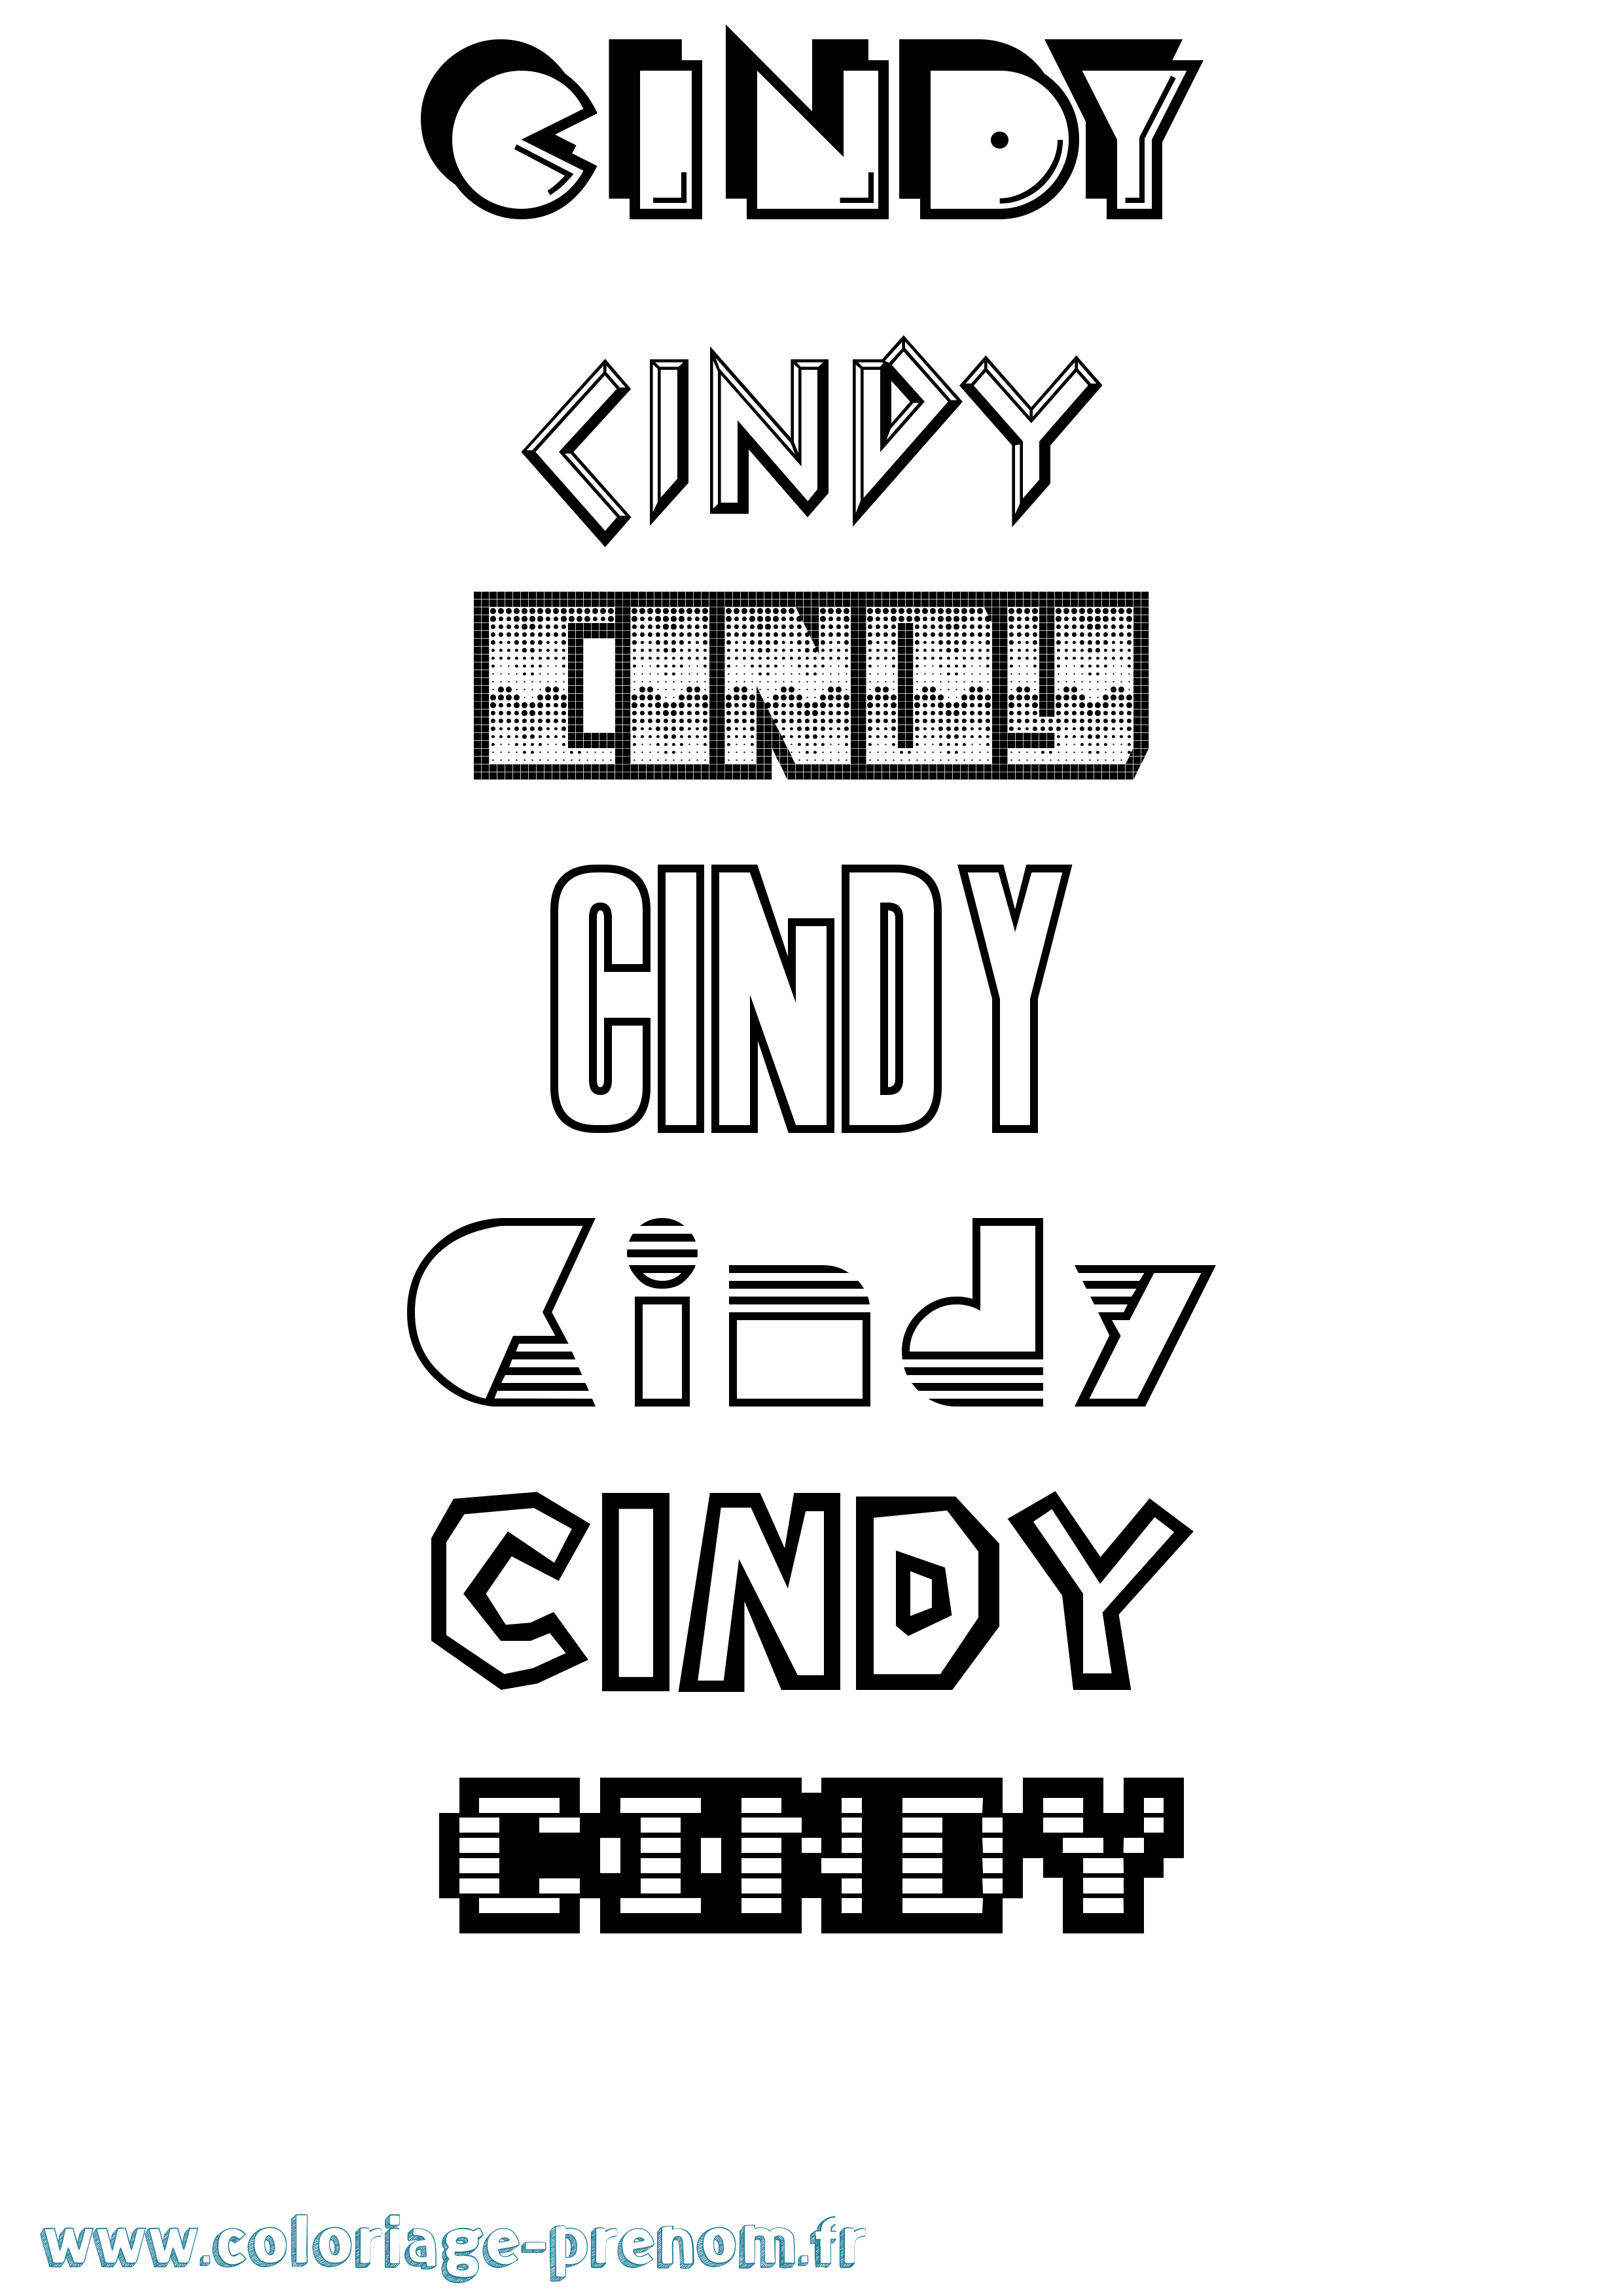 Coloriage prénom Cindy